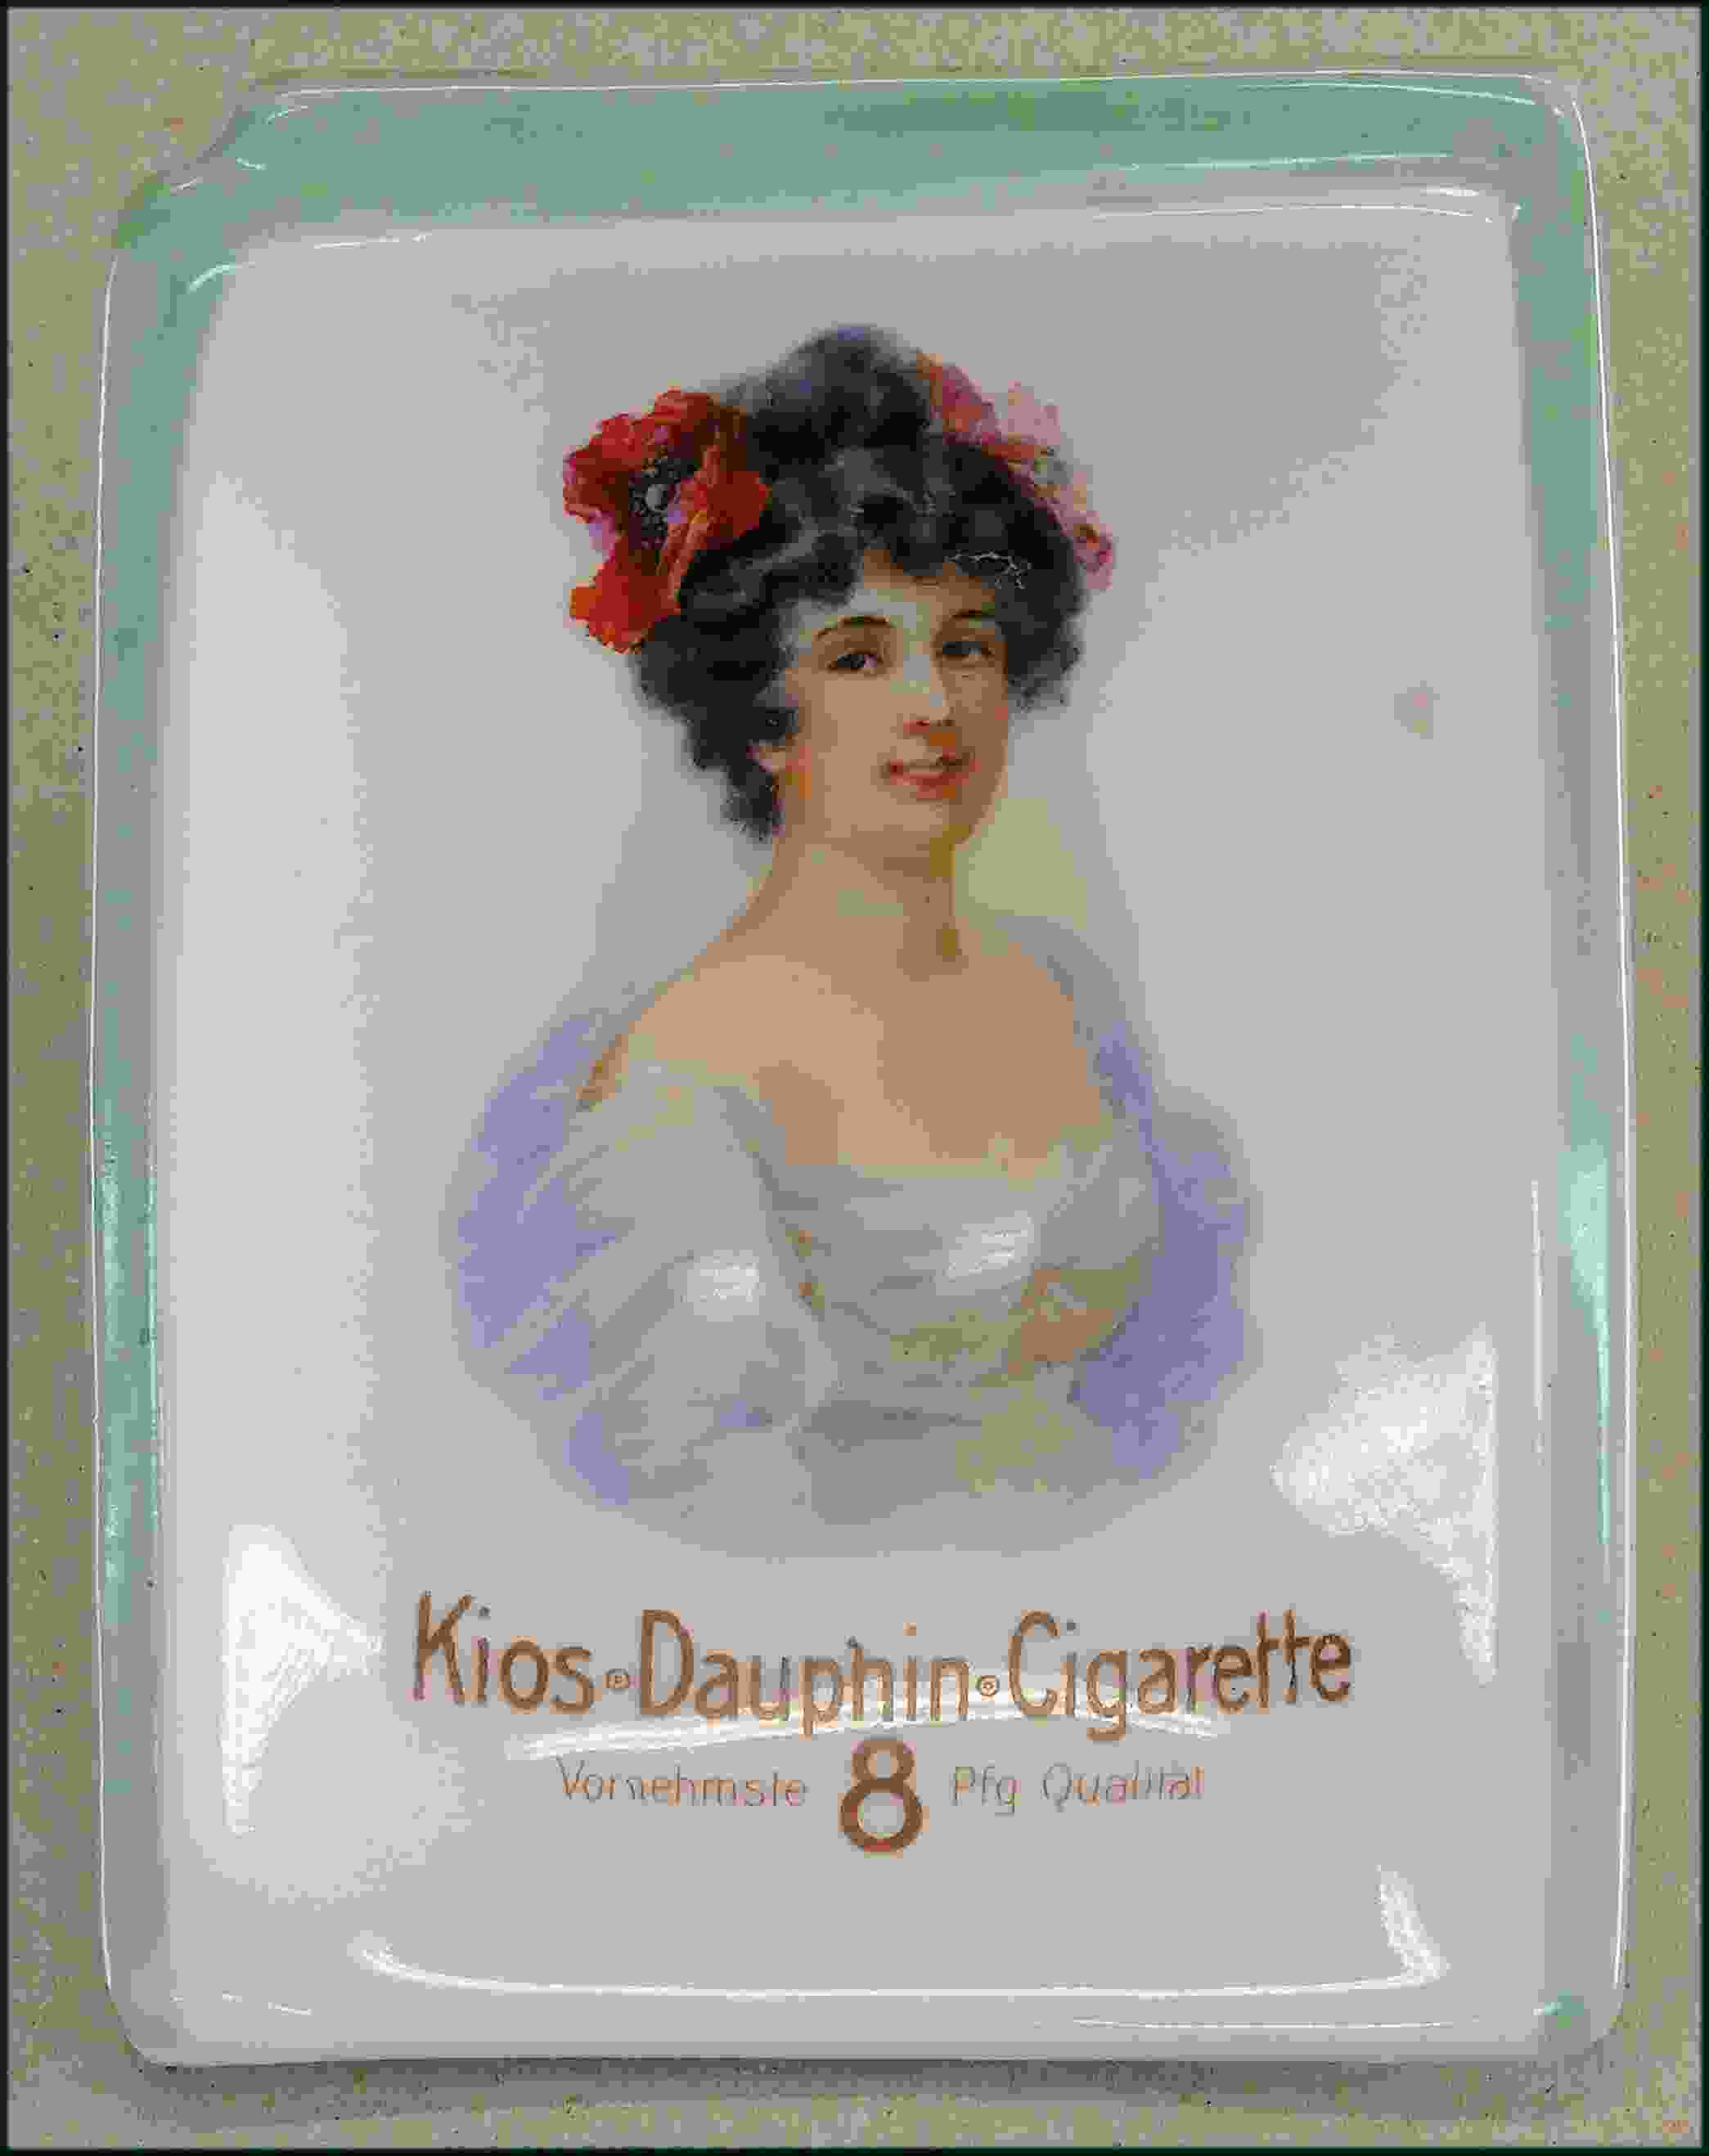 Kios-Dauphin-Cigarette Ascher 